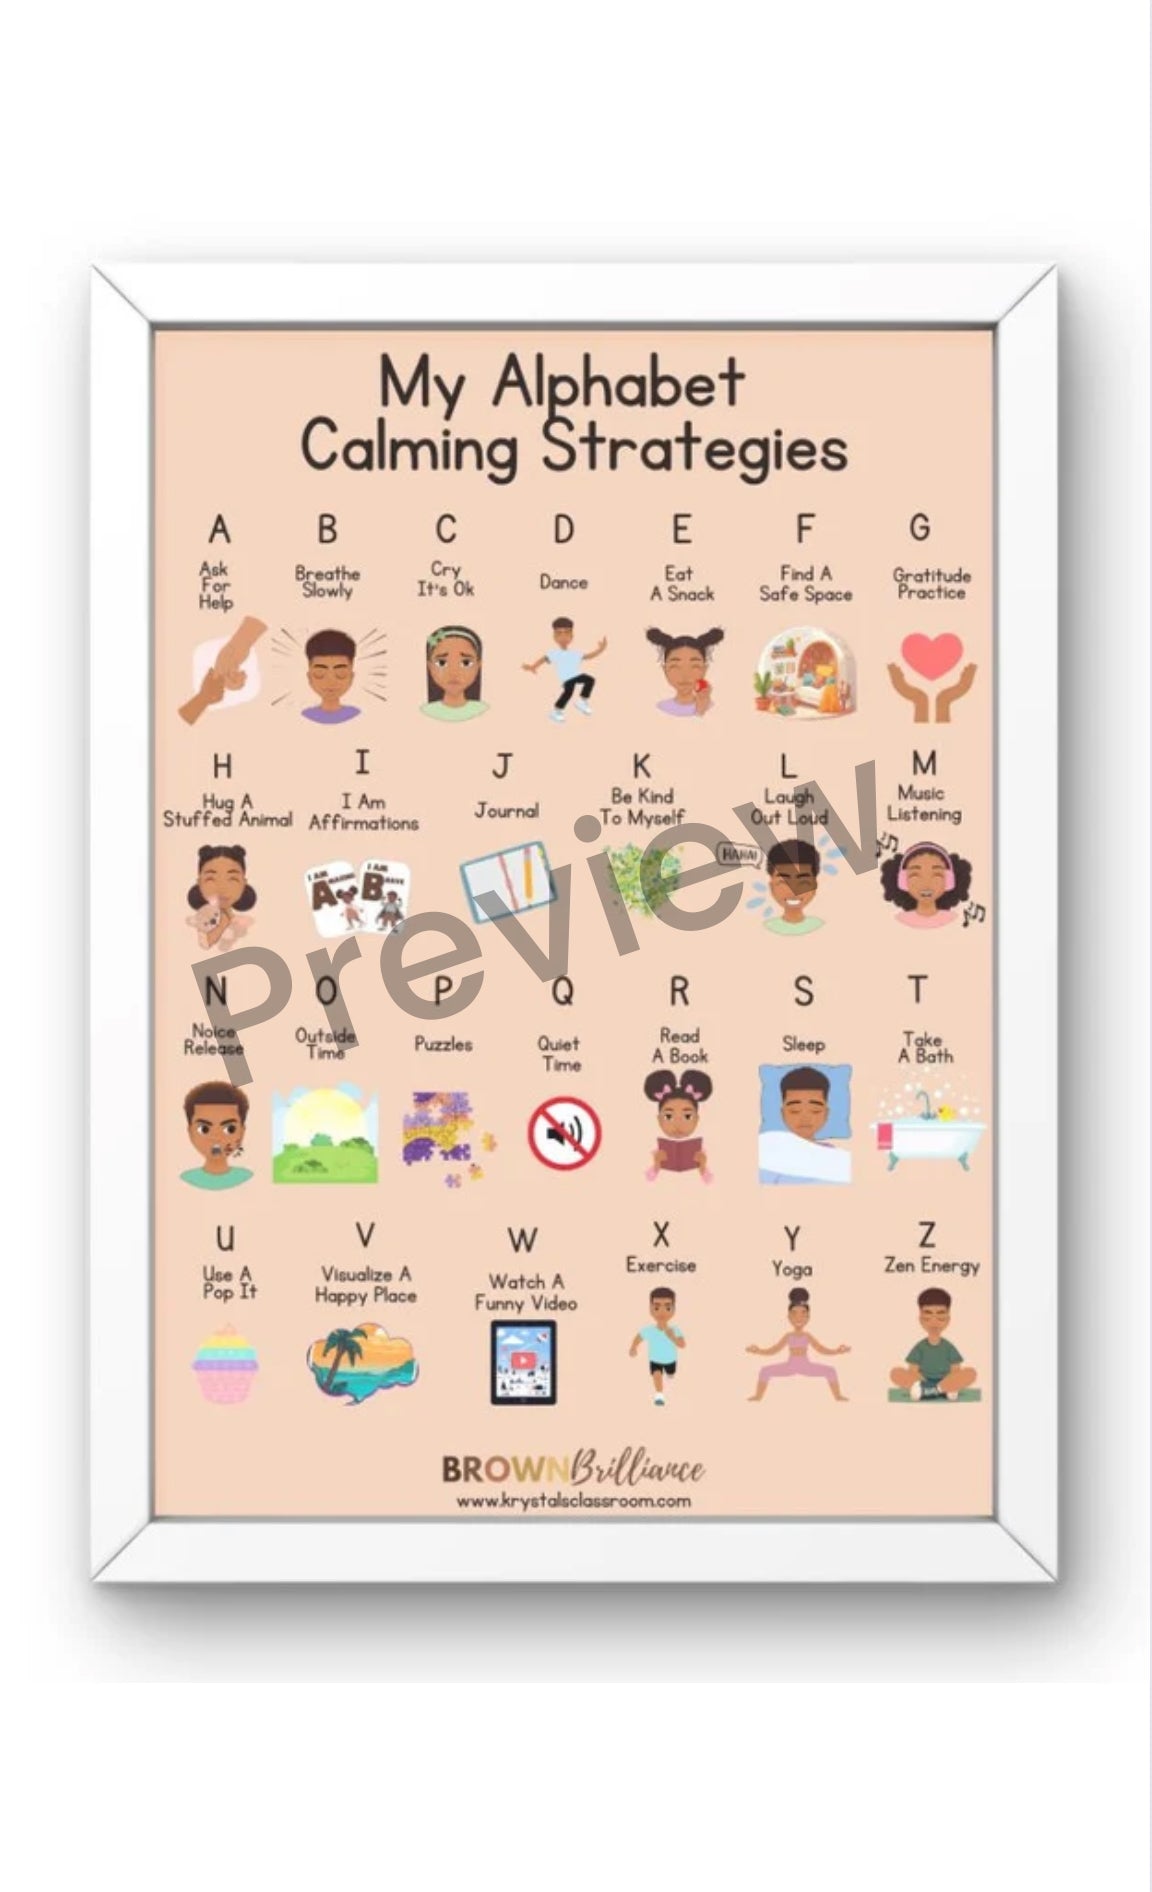 Emotions + Calming Strategies Poster Bundle